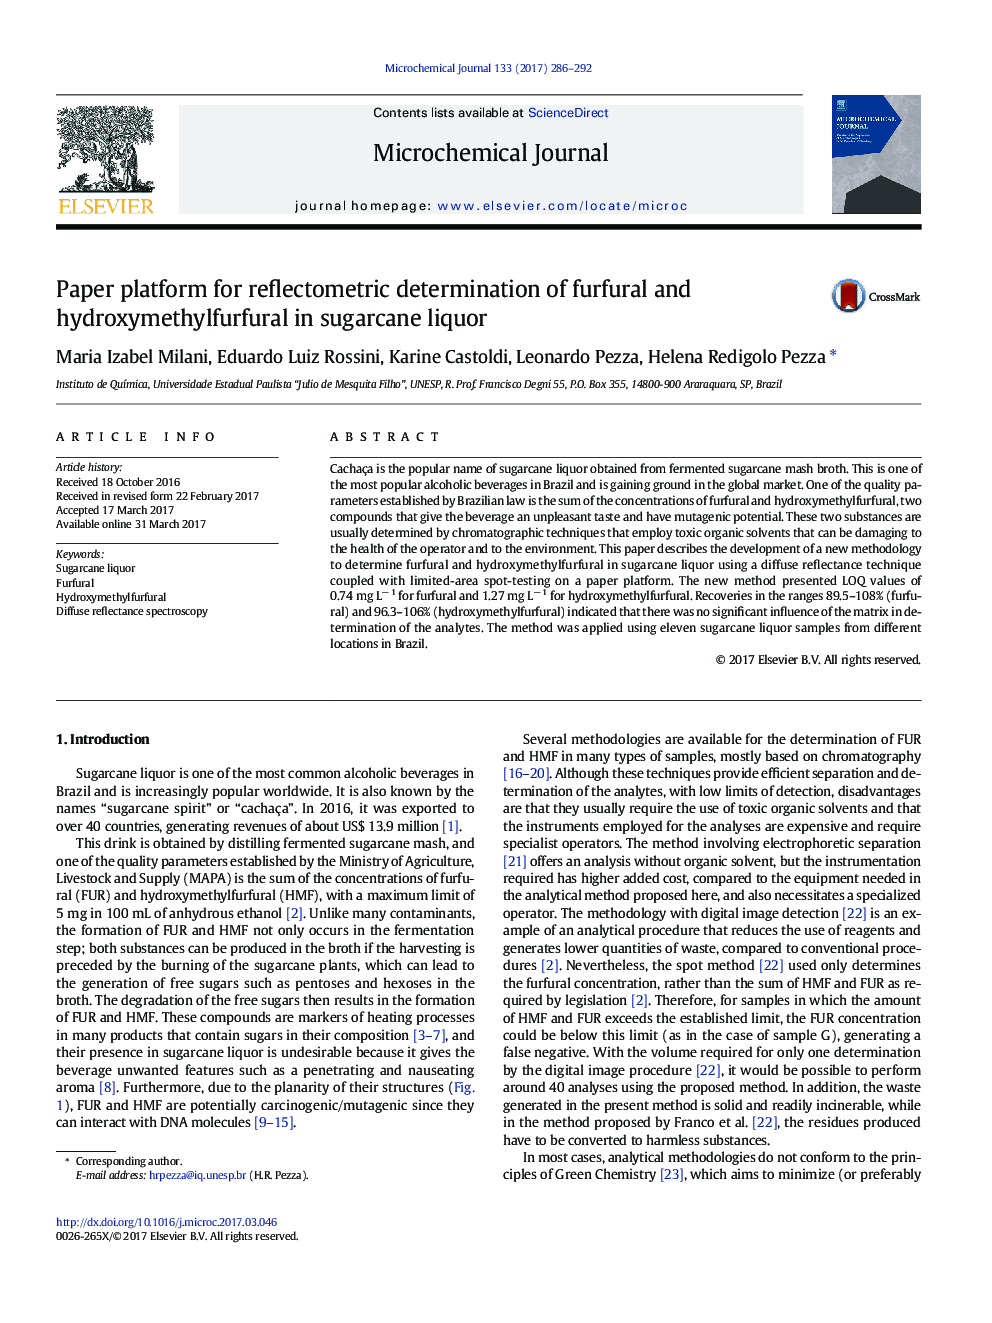 Paper platform for reflectometric determination of furfural and hydroxymethylfurfural in sugarcane liquor